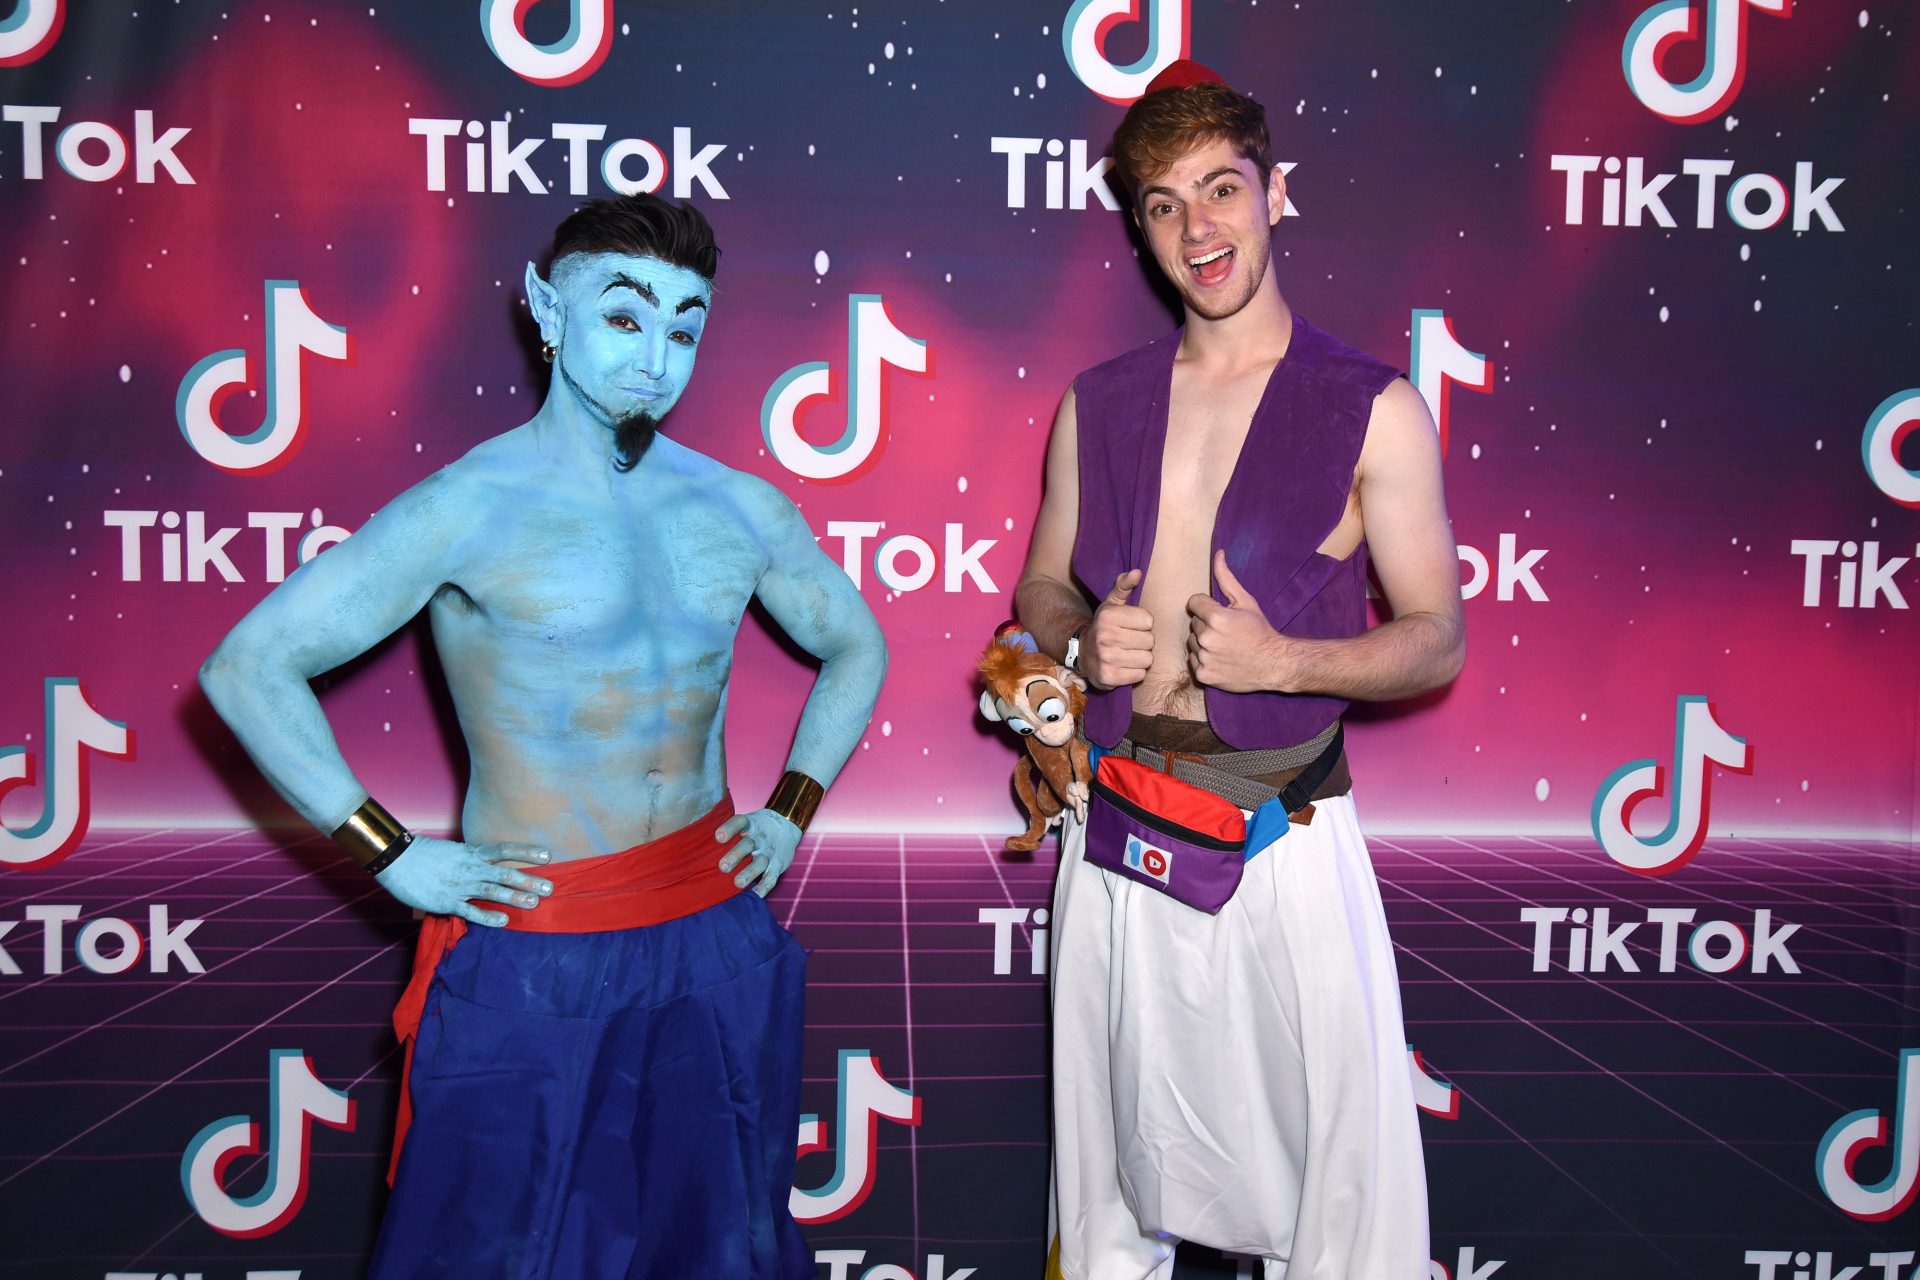 Kurt Tocci and Markian Benhamou as Genie and Aladdin